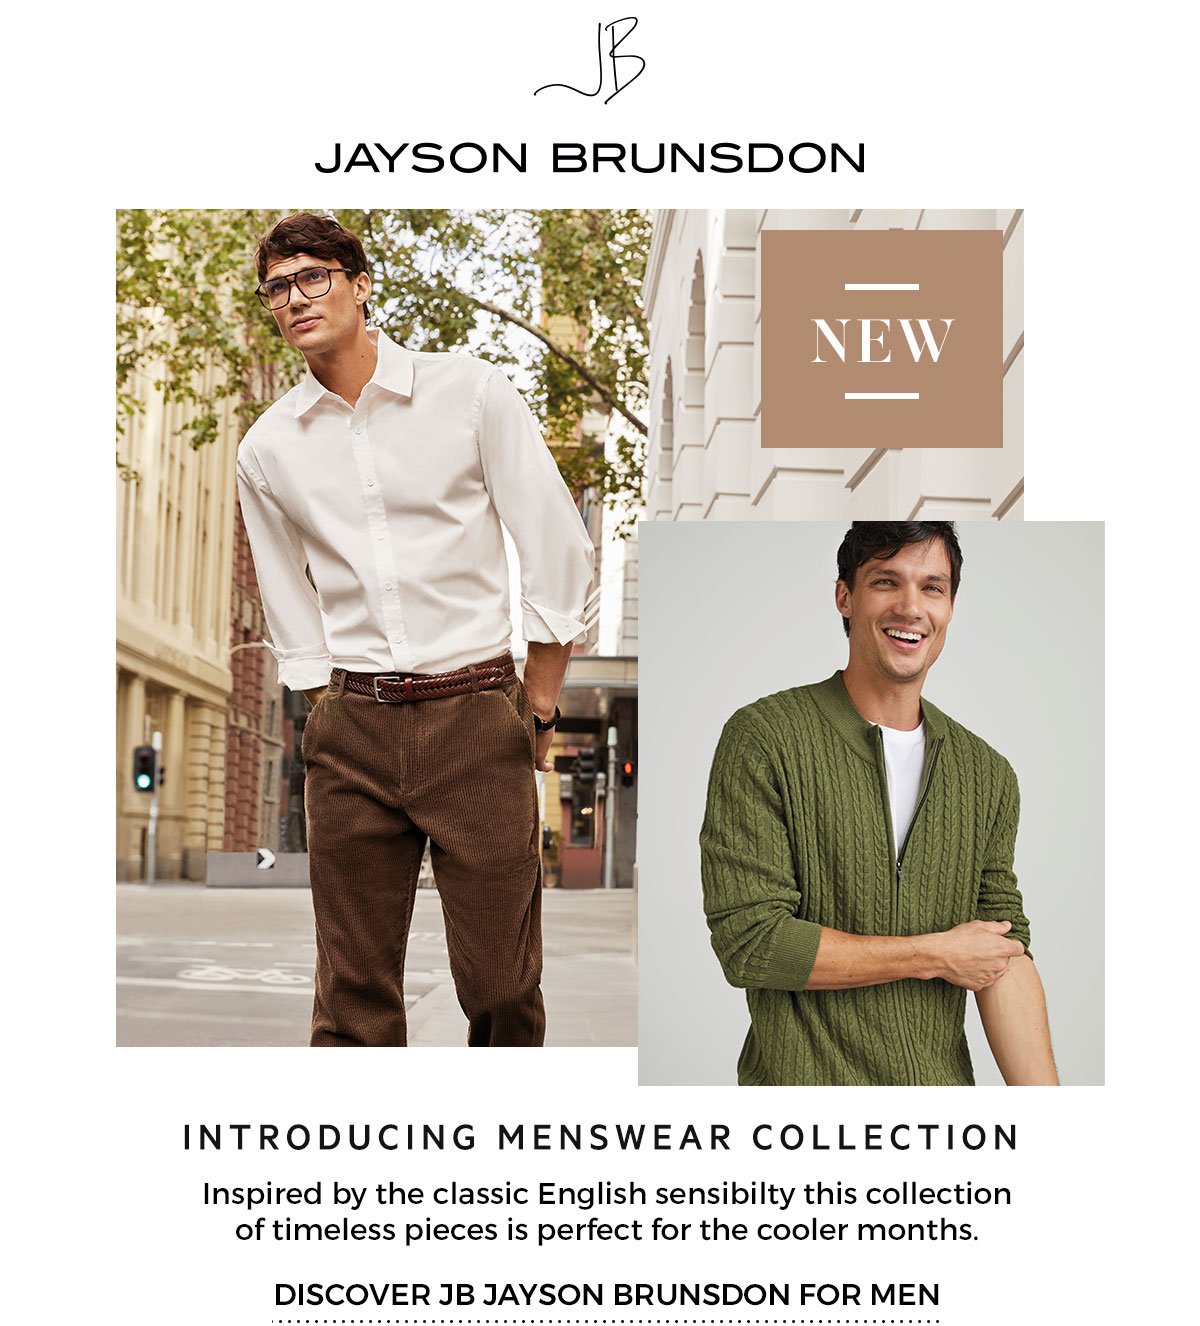 JB Jayson Brunsdon for Men